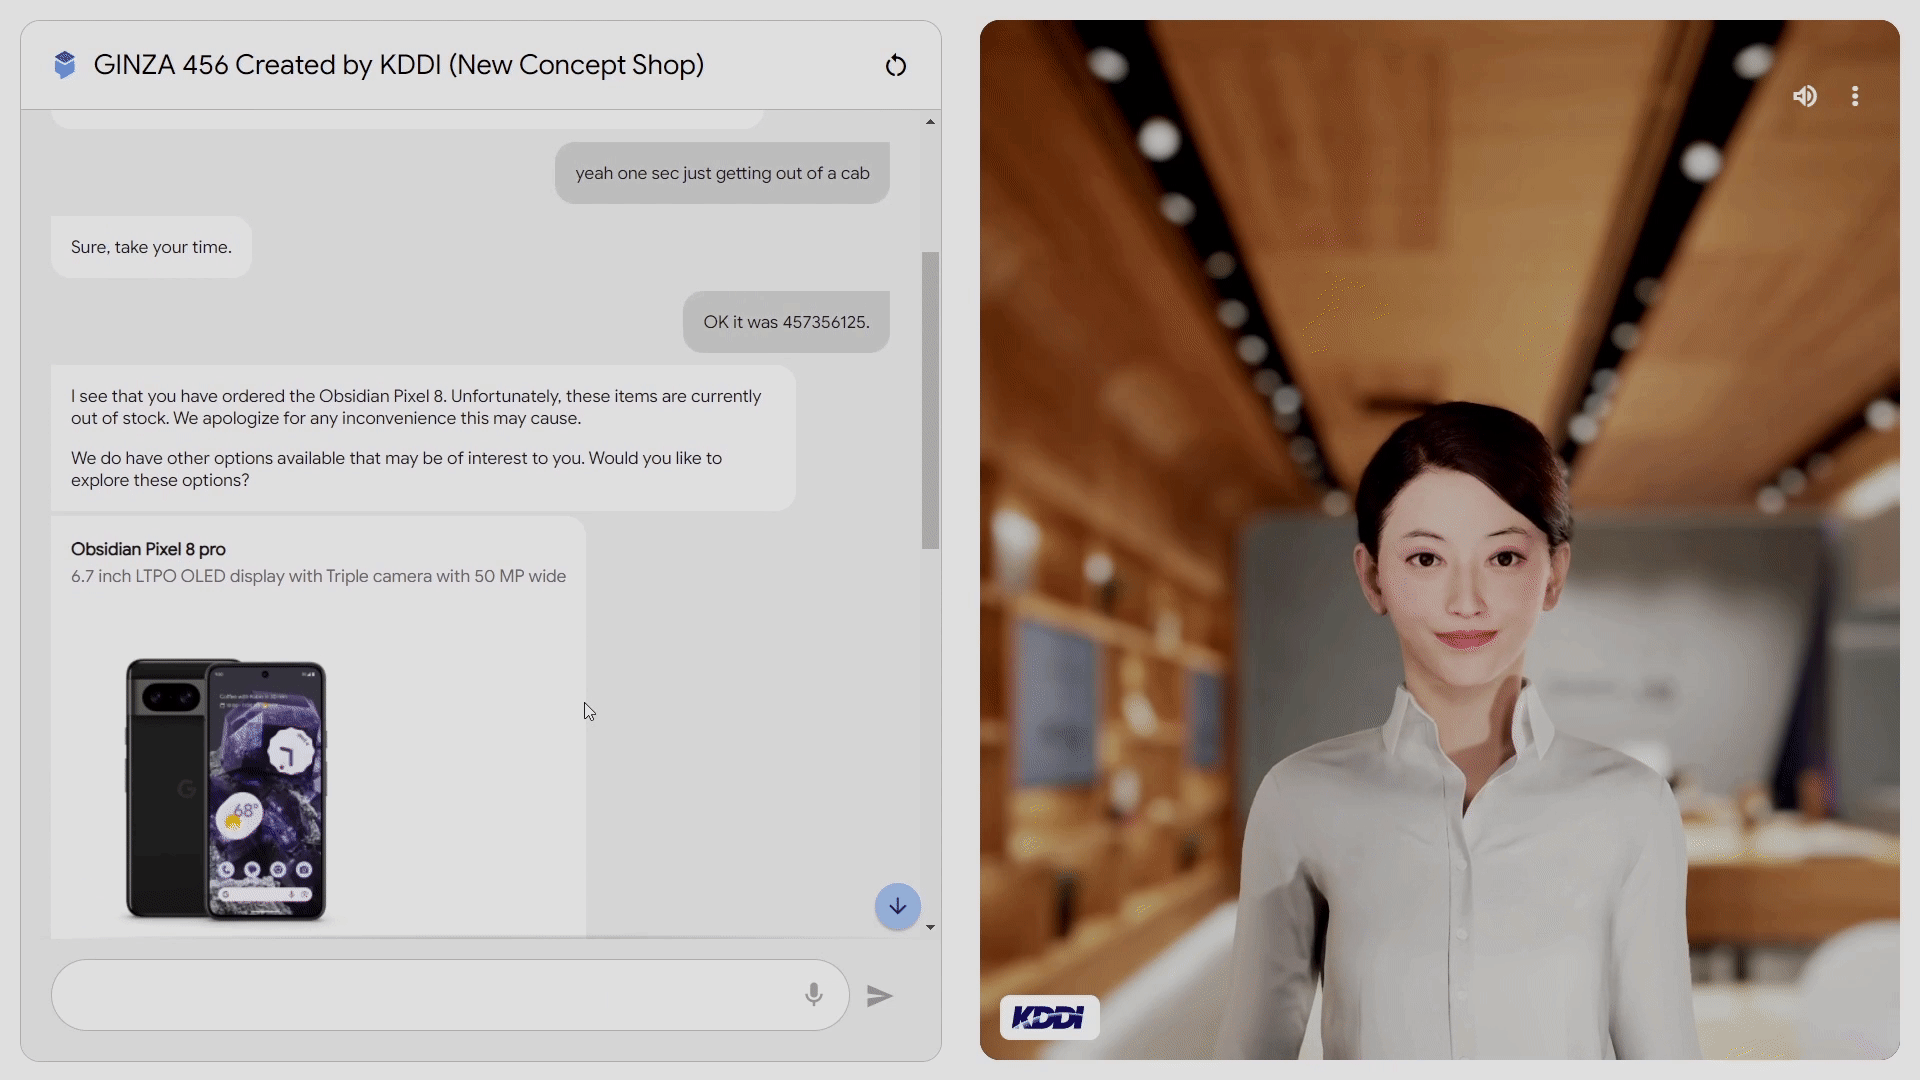 irtual customer agent Metako assisting a user exchanging a Pixel 8 smartphone